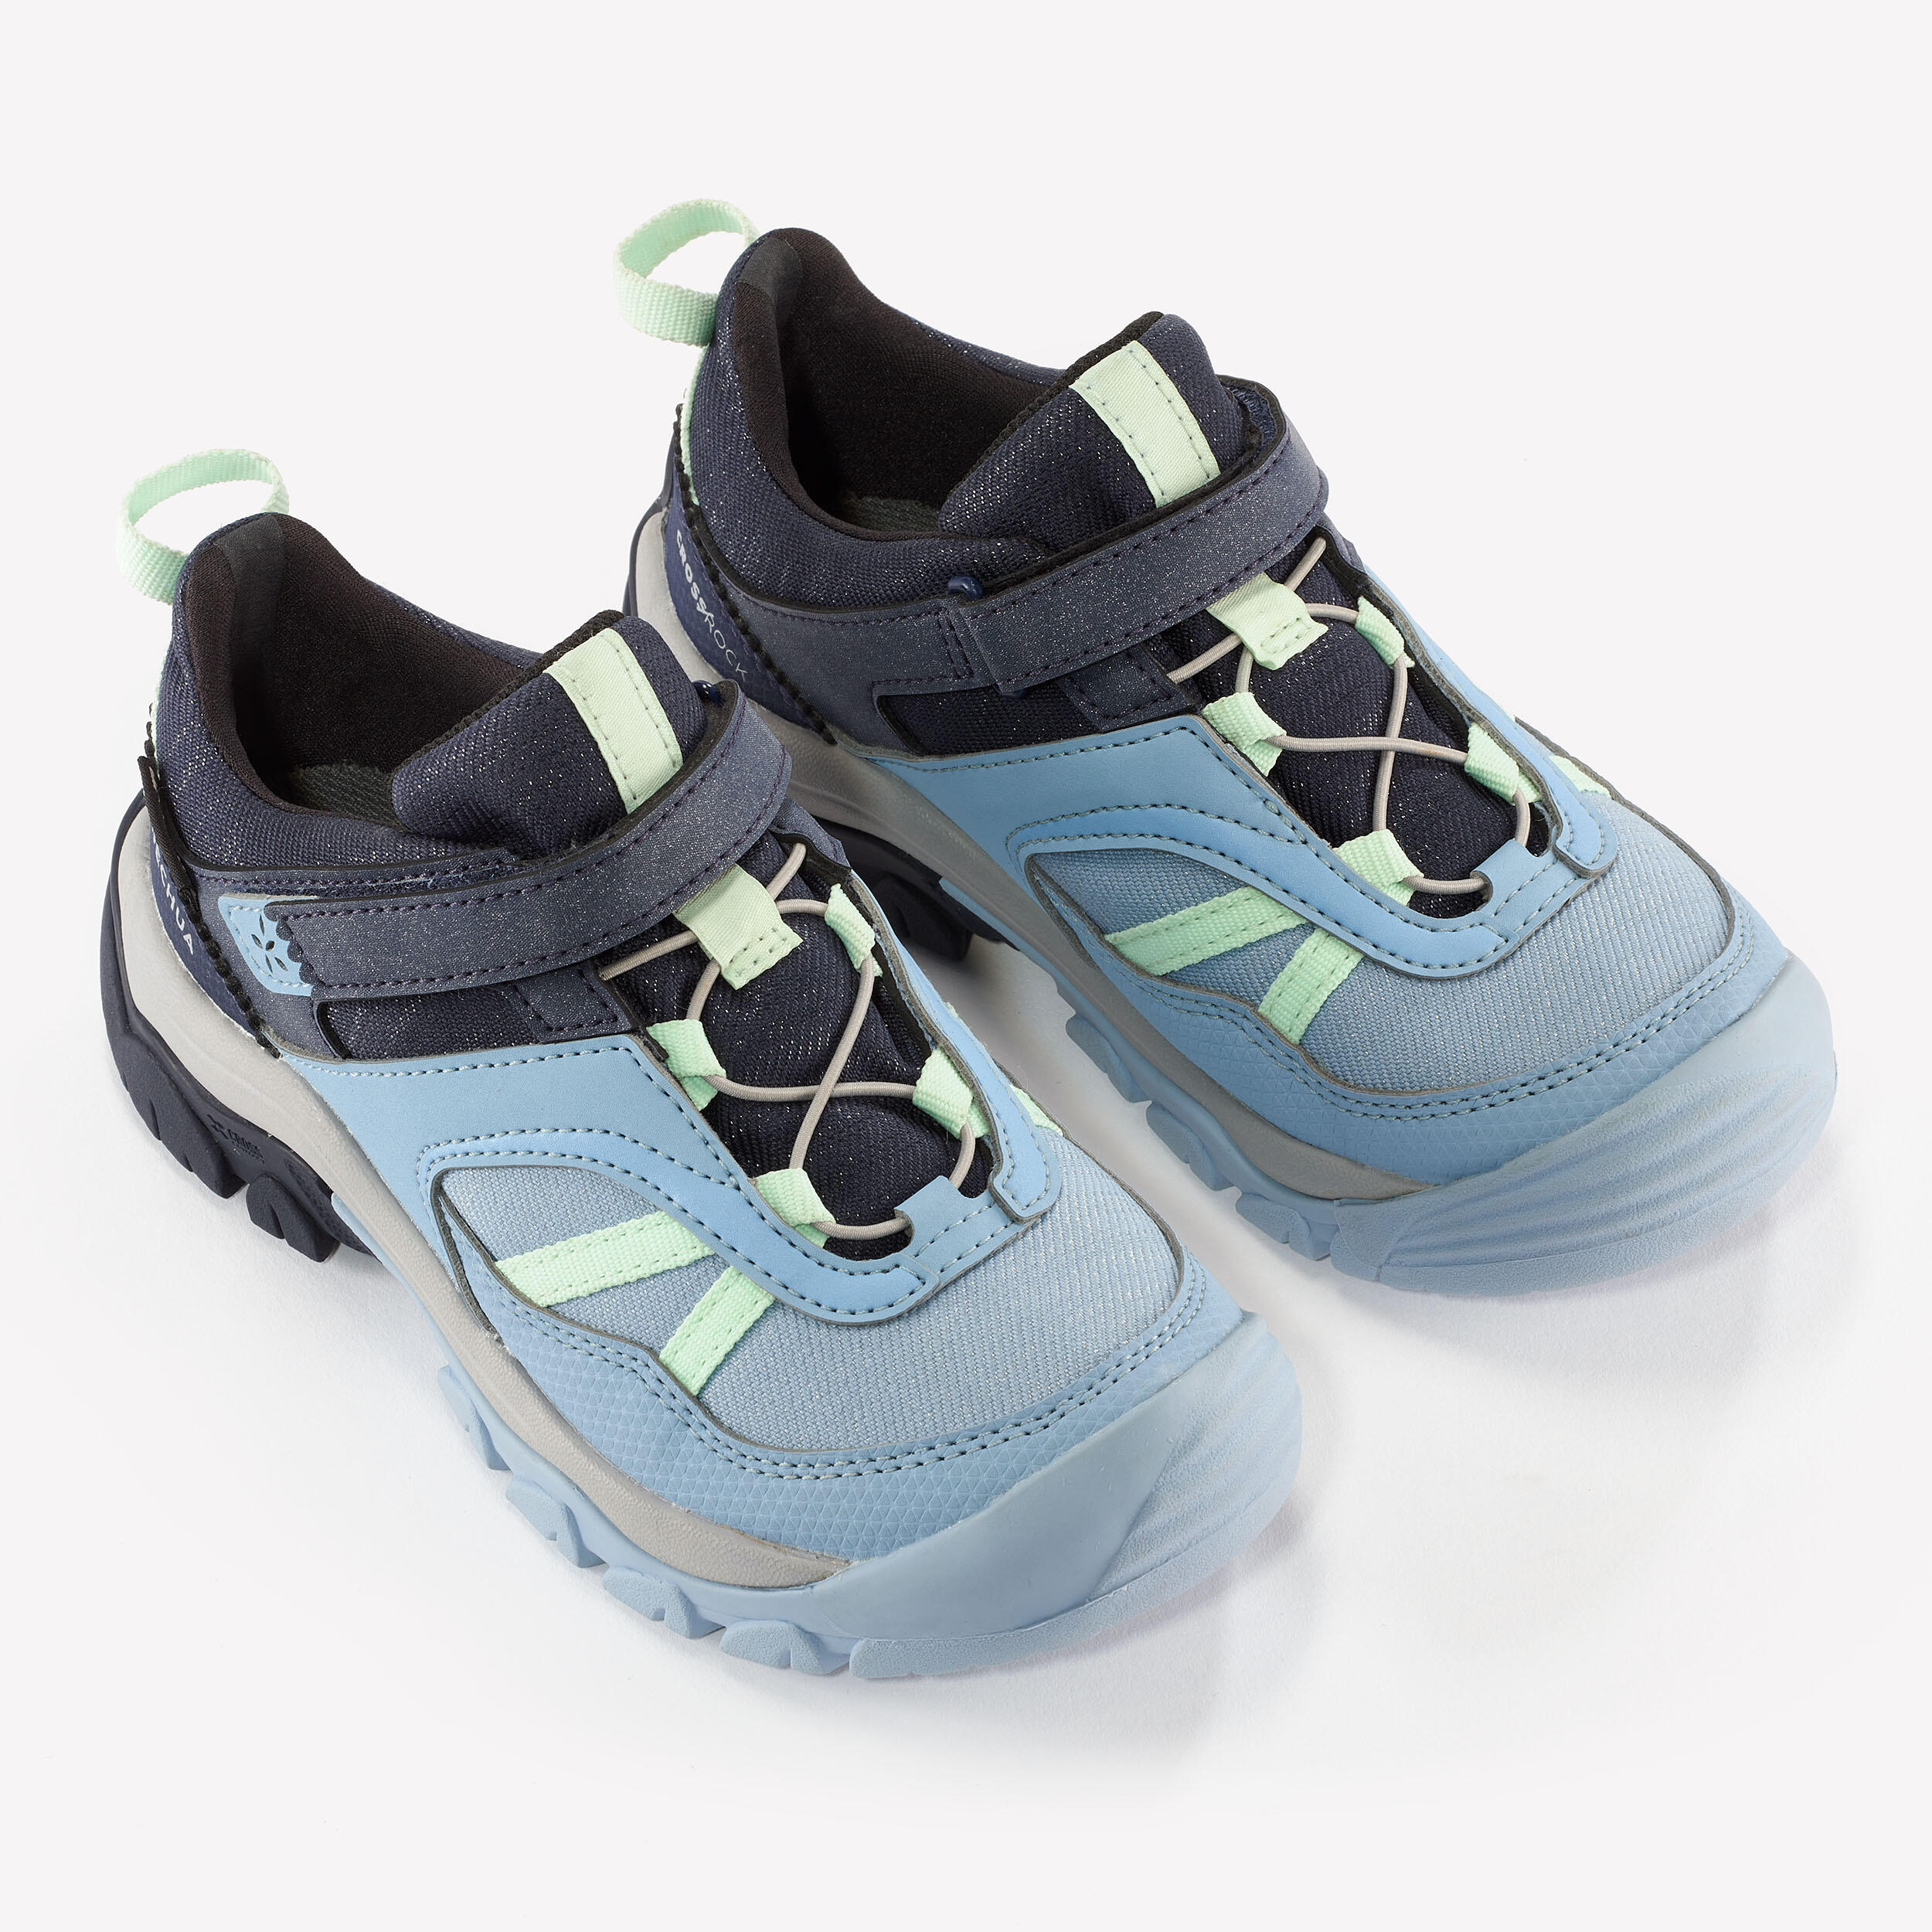 Children's Waterproof Hiking Boots - CROSSROCK light blue - 28–34 5/10